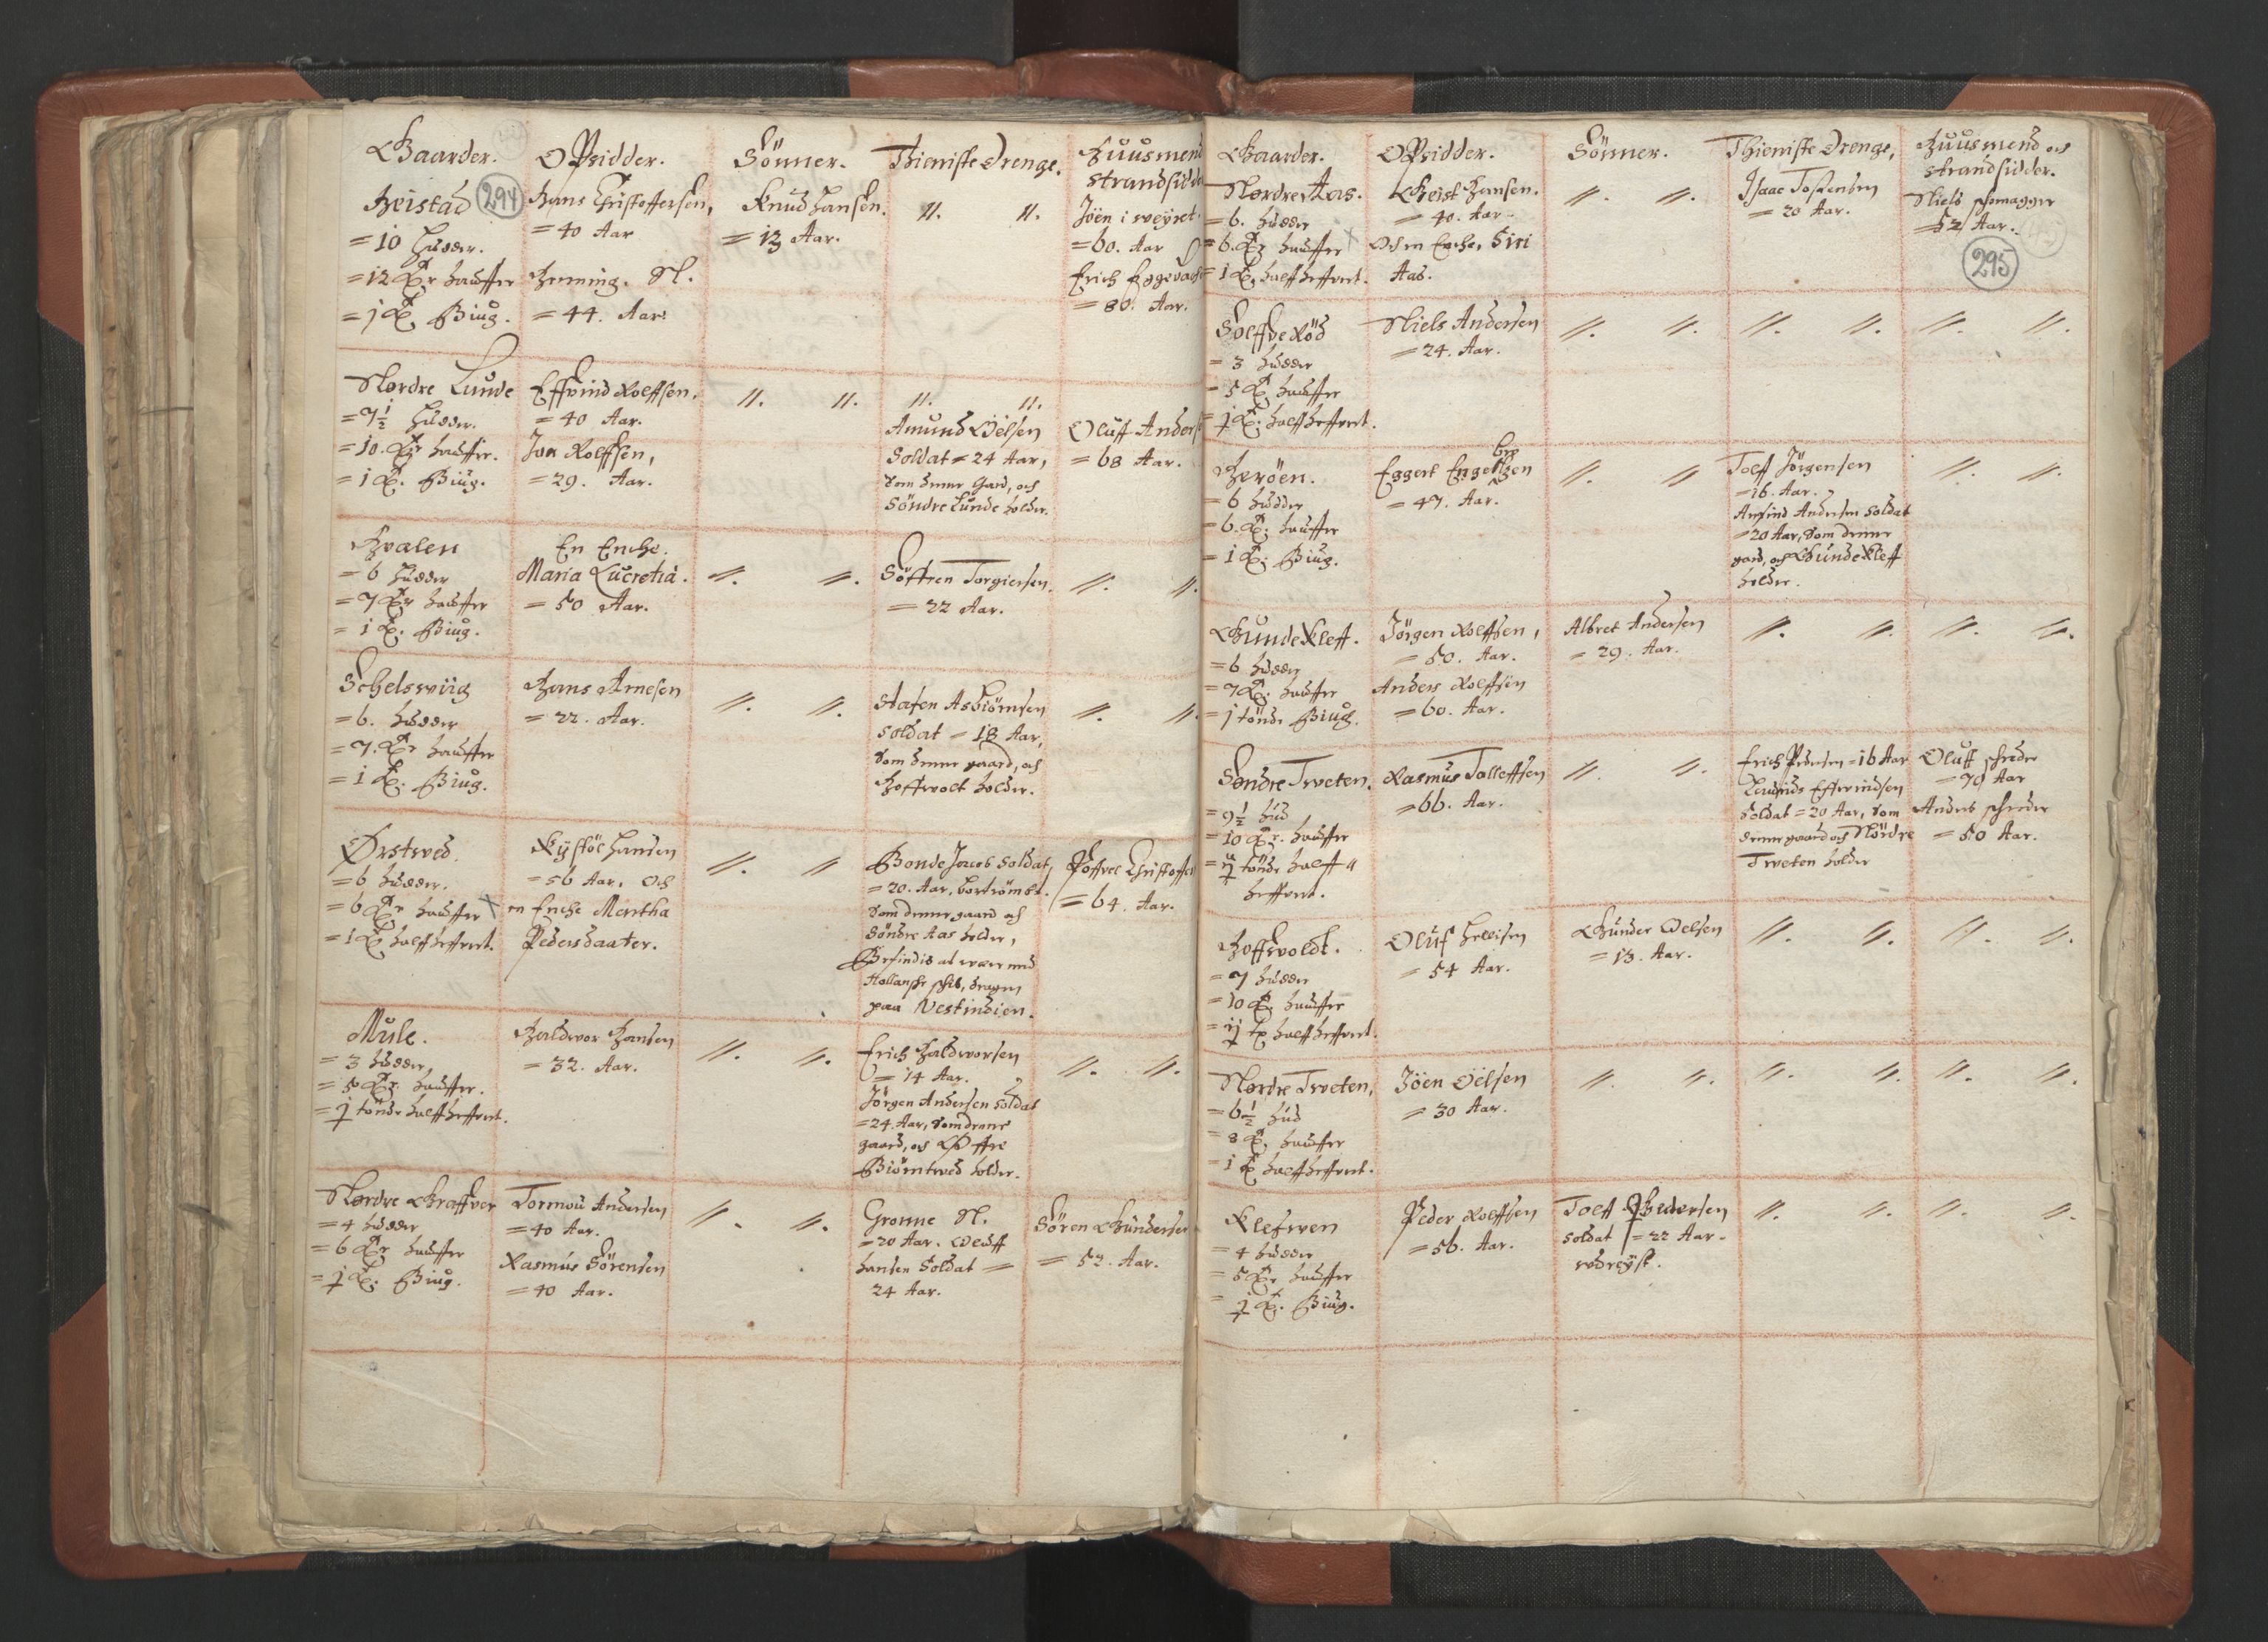 RA, Vicar's Census 1664-1666, no. 12: Øvre Telemark deanery, Nedre Telemark deanery and Bamble deanery, 1664-1666, p. 294-295